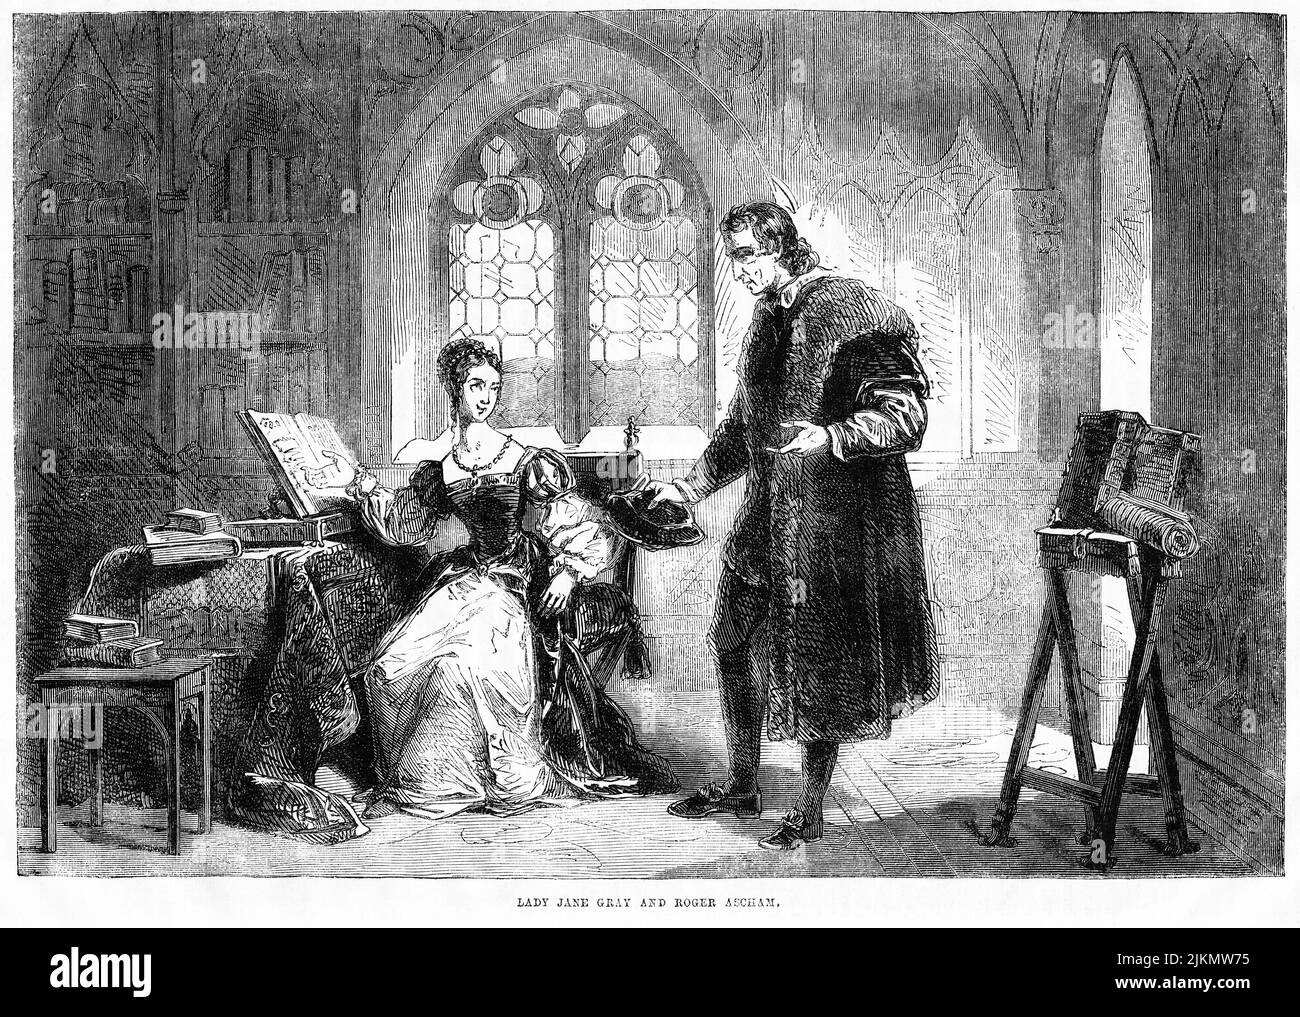 Lady Jane Gray et Roger Ascham, illustration du livre, « John Cassel's Illustrated History of England, Volume II », texte de William Howitt, Cassell, Petter et Galpin, Londres, 1858 Banque D'Images